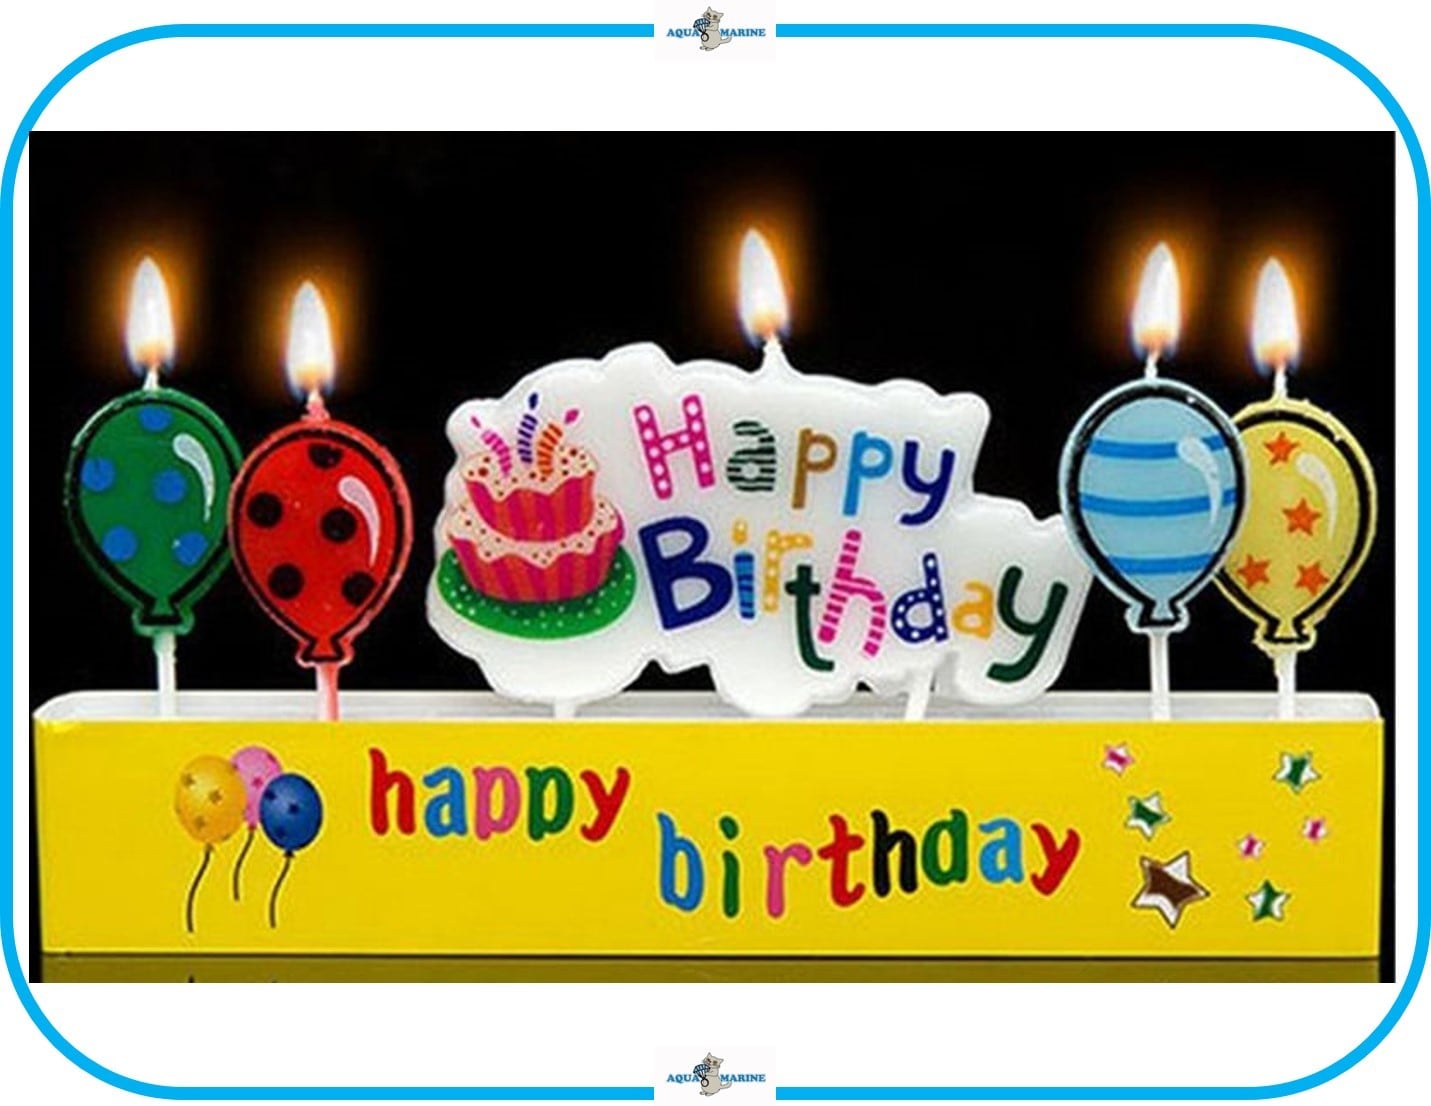 E231 HappyBirthday キャンドル ロウソク バースデー ケーキ デコレーション 海外 オシャレ デザイン 誕生日 パーティー お祝い  キッズ onlineshop AquaMarine